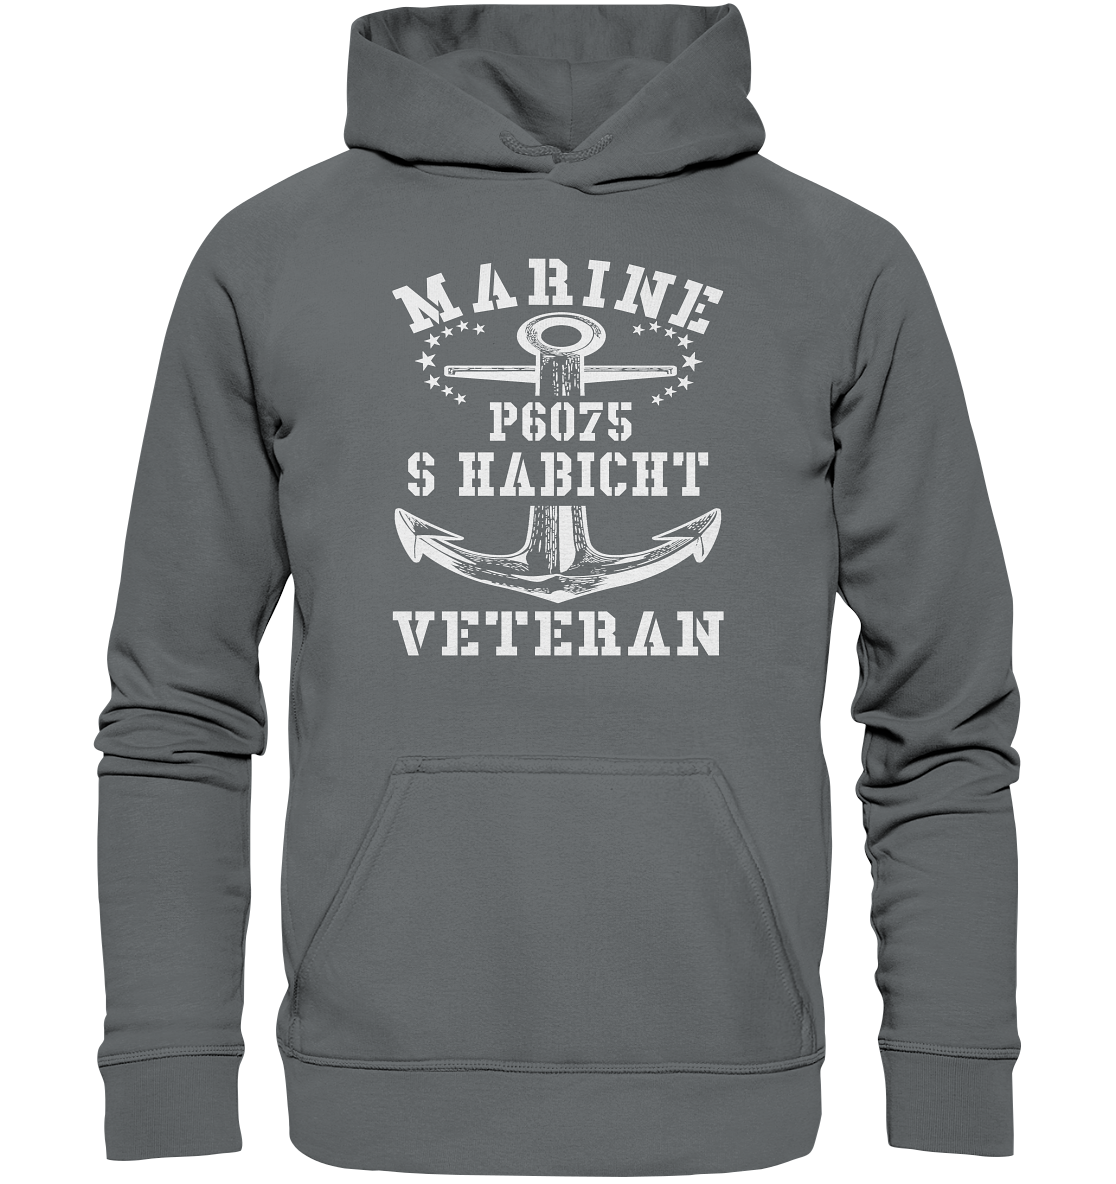 P6075 S HABICHT Marine Veteran - Basic Unisex Hoodie